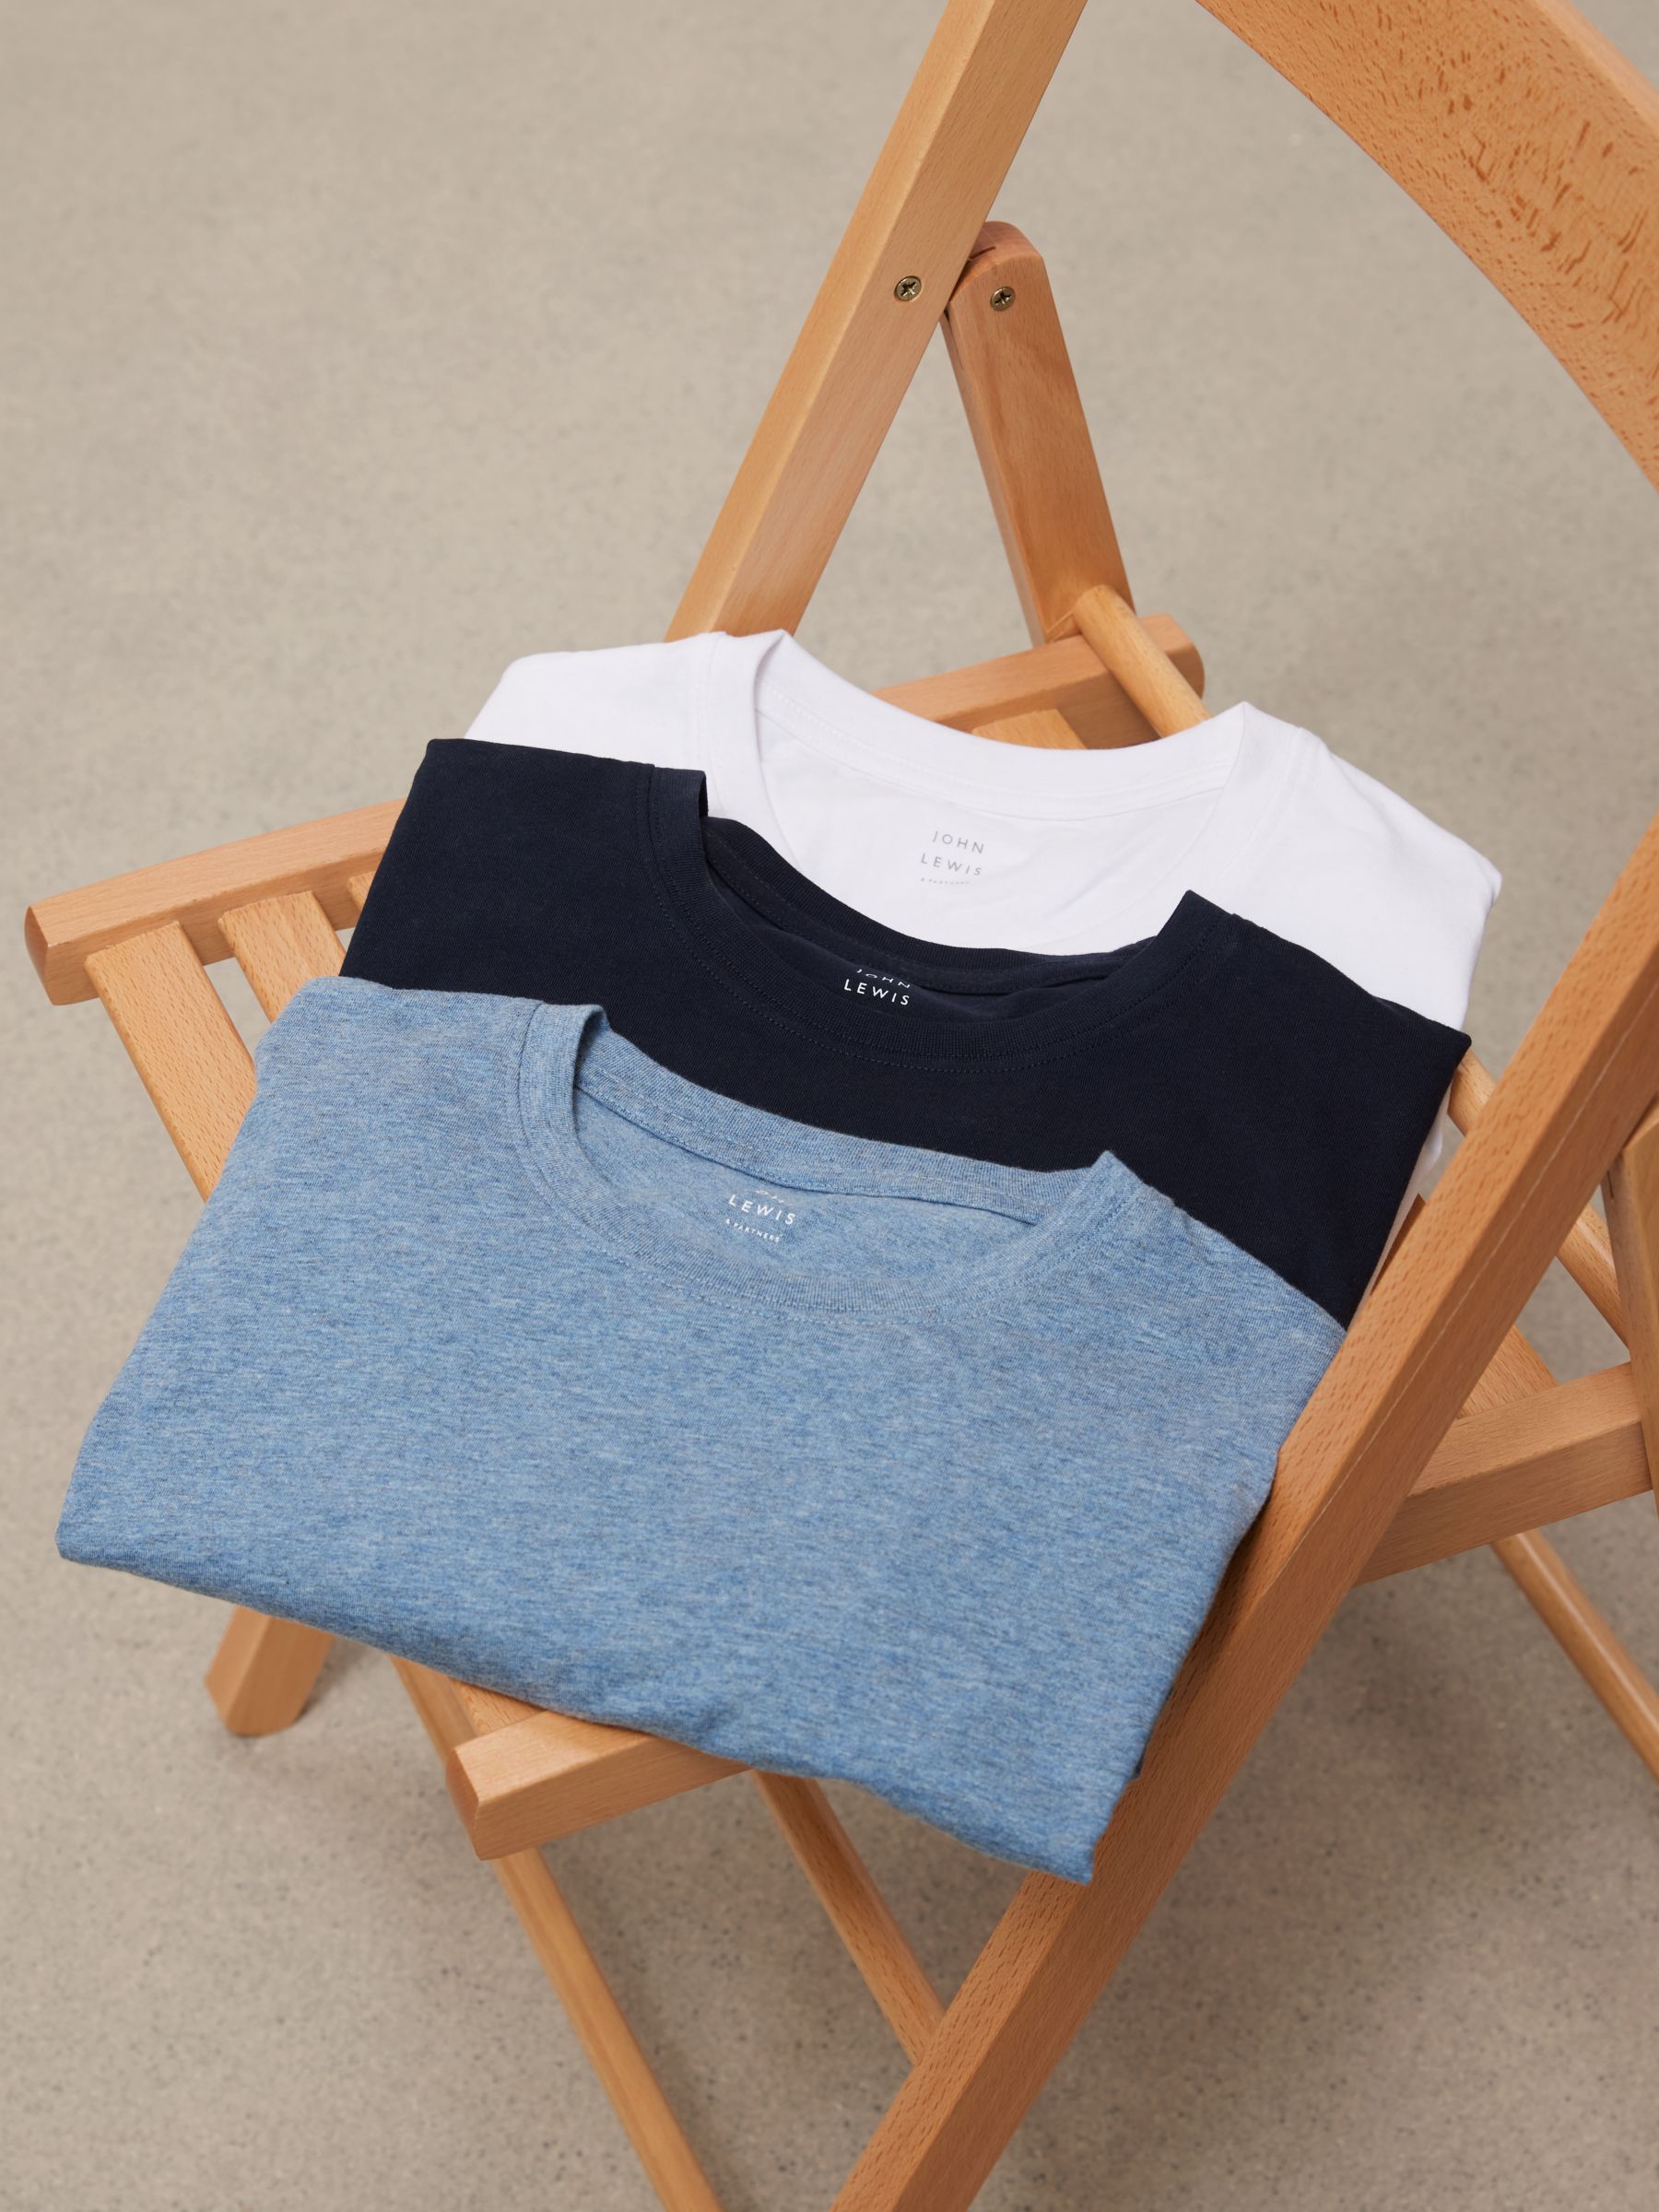 John Lewis Cotton T-Shirt, Pack of 3, White/Blue Melange/Navy, M